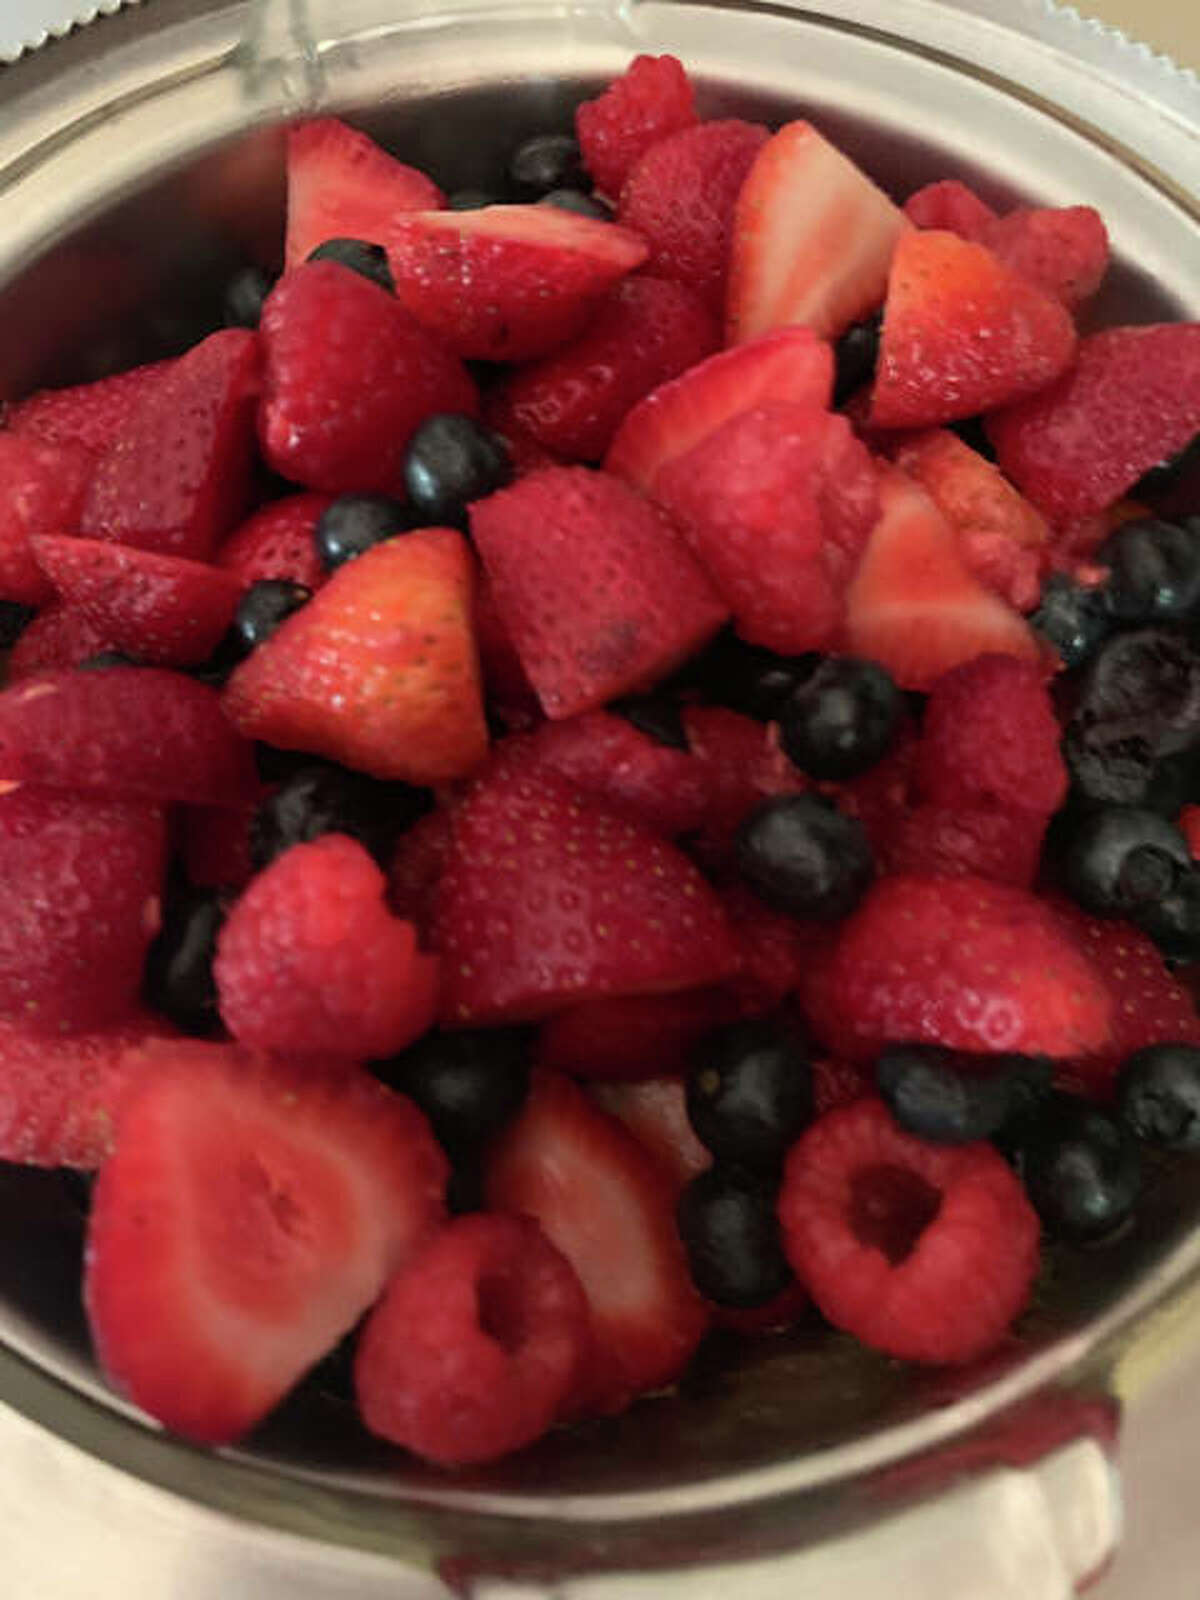 A side of seasonal fruit, with strawberries, raspberries and blueberries.